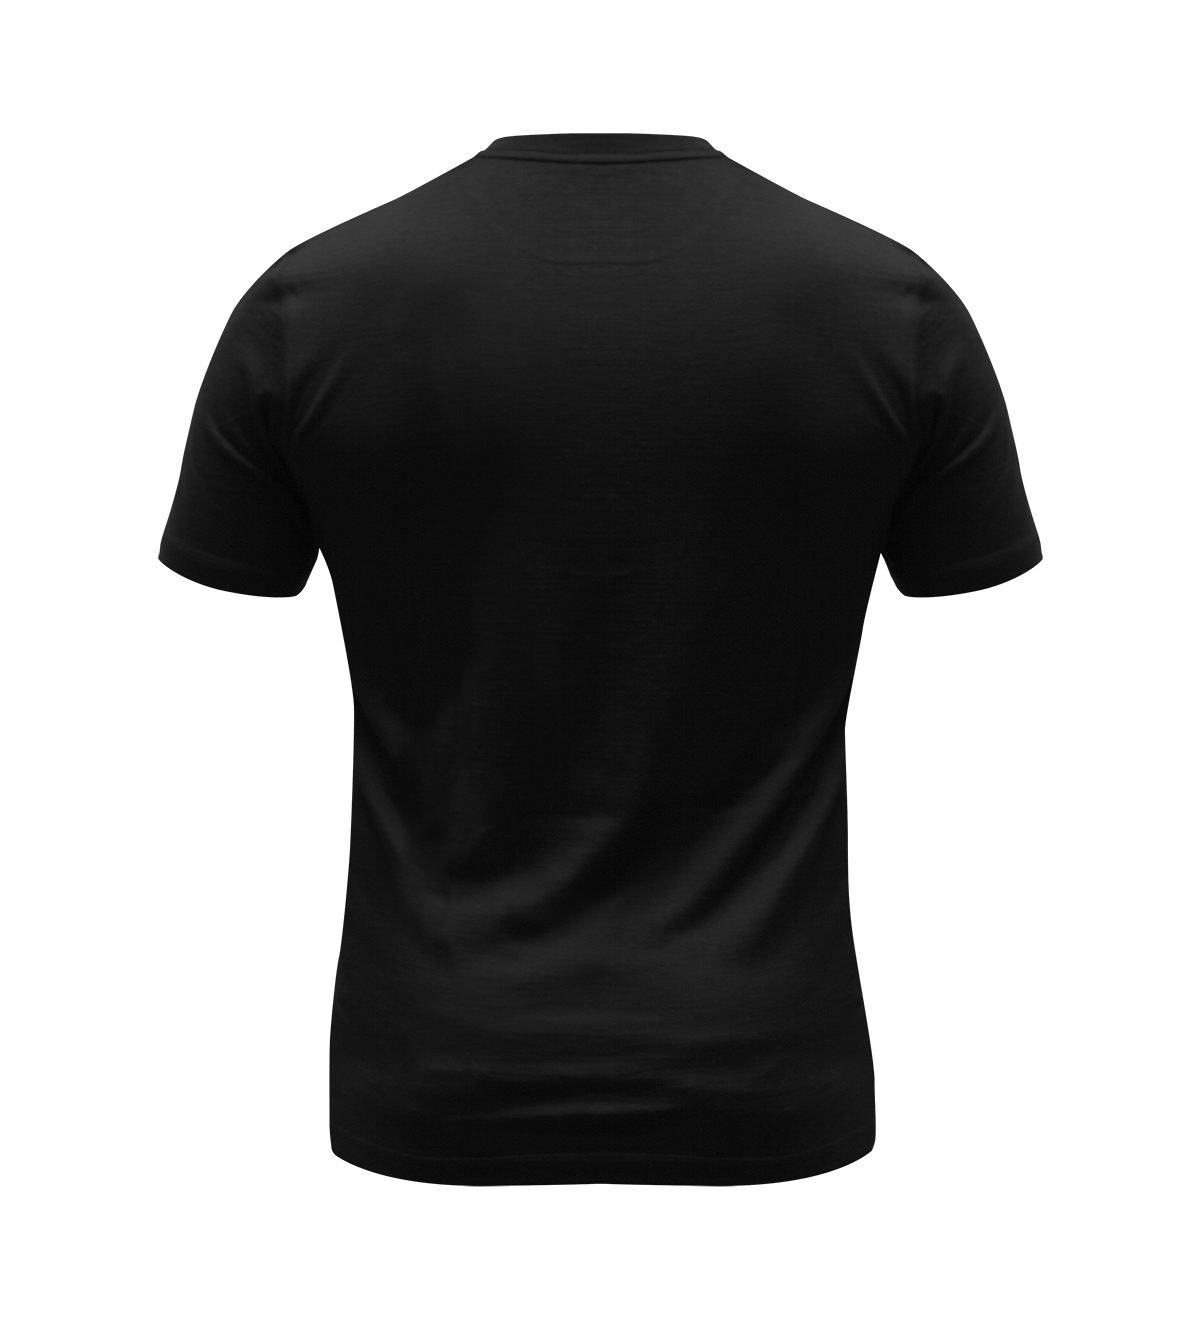 Natural %100 Merino Wool Short Sleeve T-Shirt for Men - Thermal